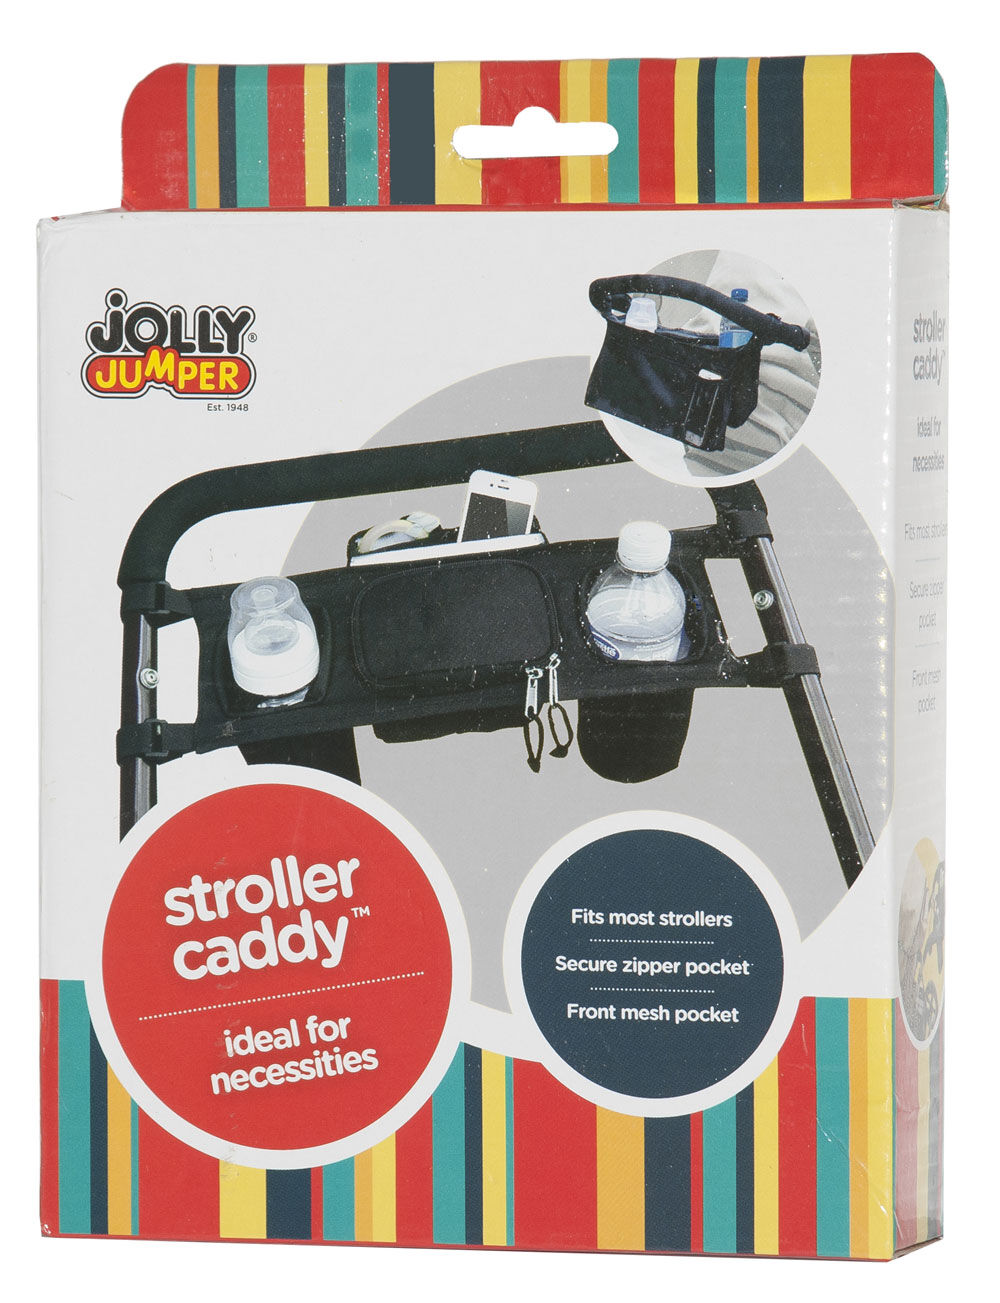 jolly jumper stroller caddy